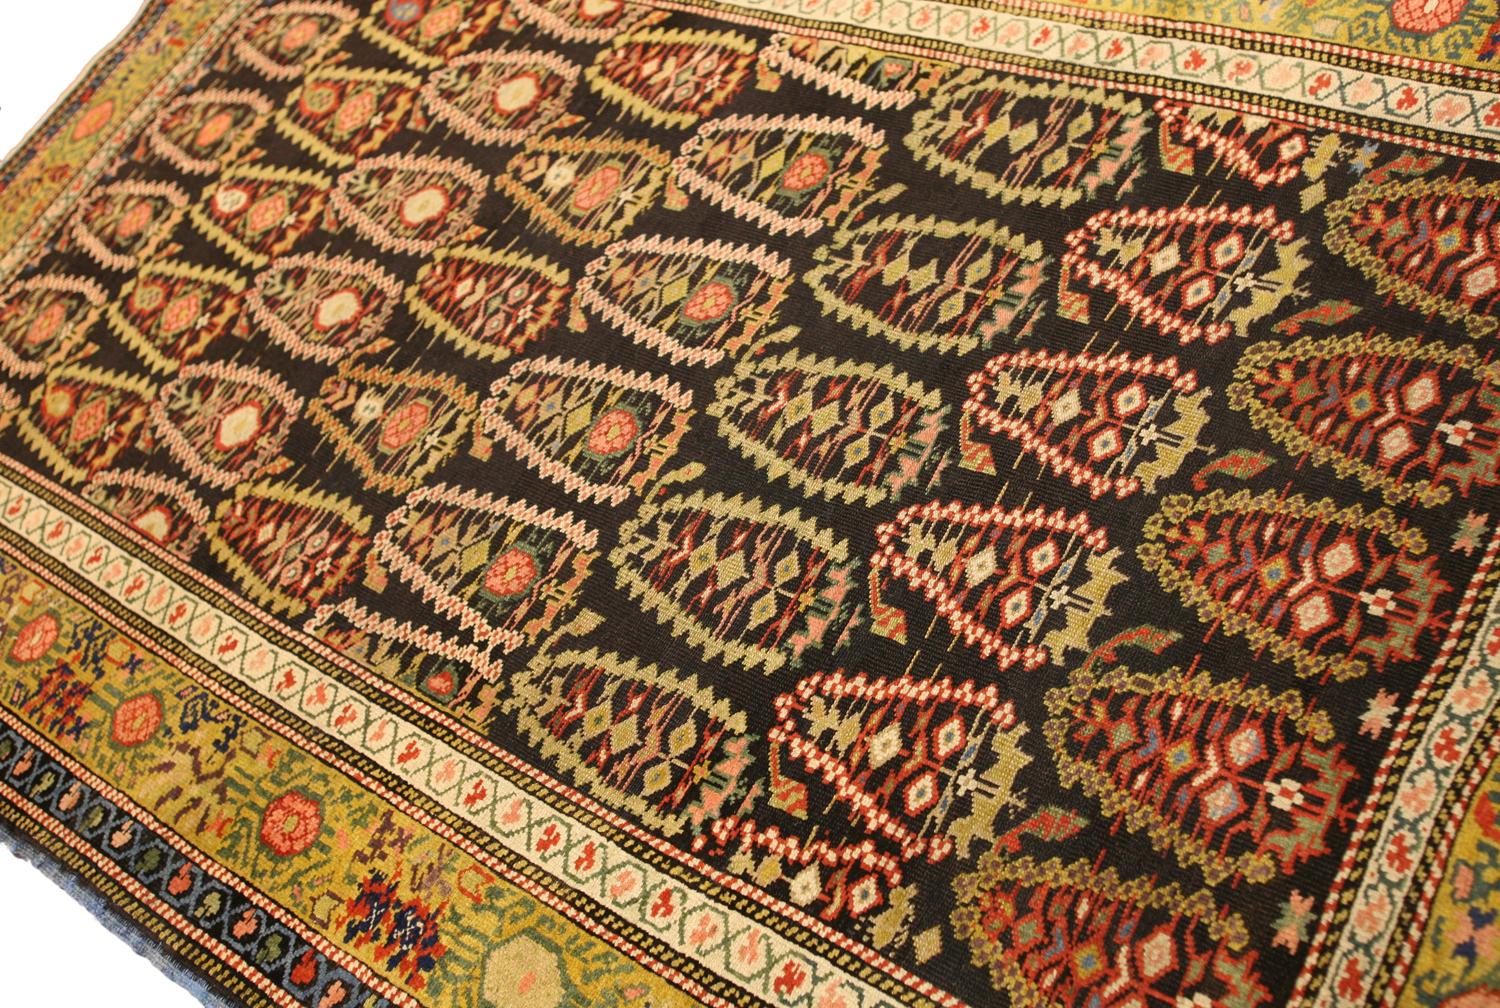 Kazak Antique Caucasian Olive Green Border Wool Seychour 'Zeikhur' Rug, 1880-1900 For Sale